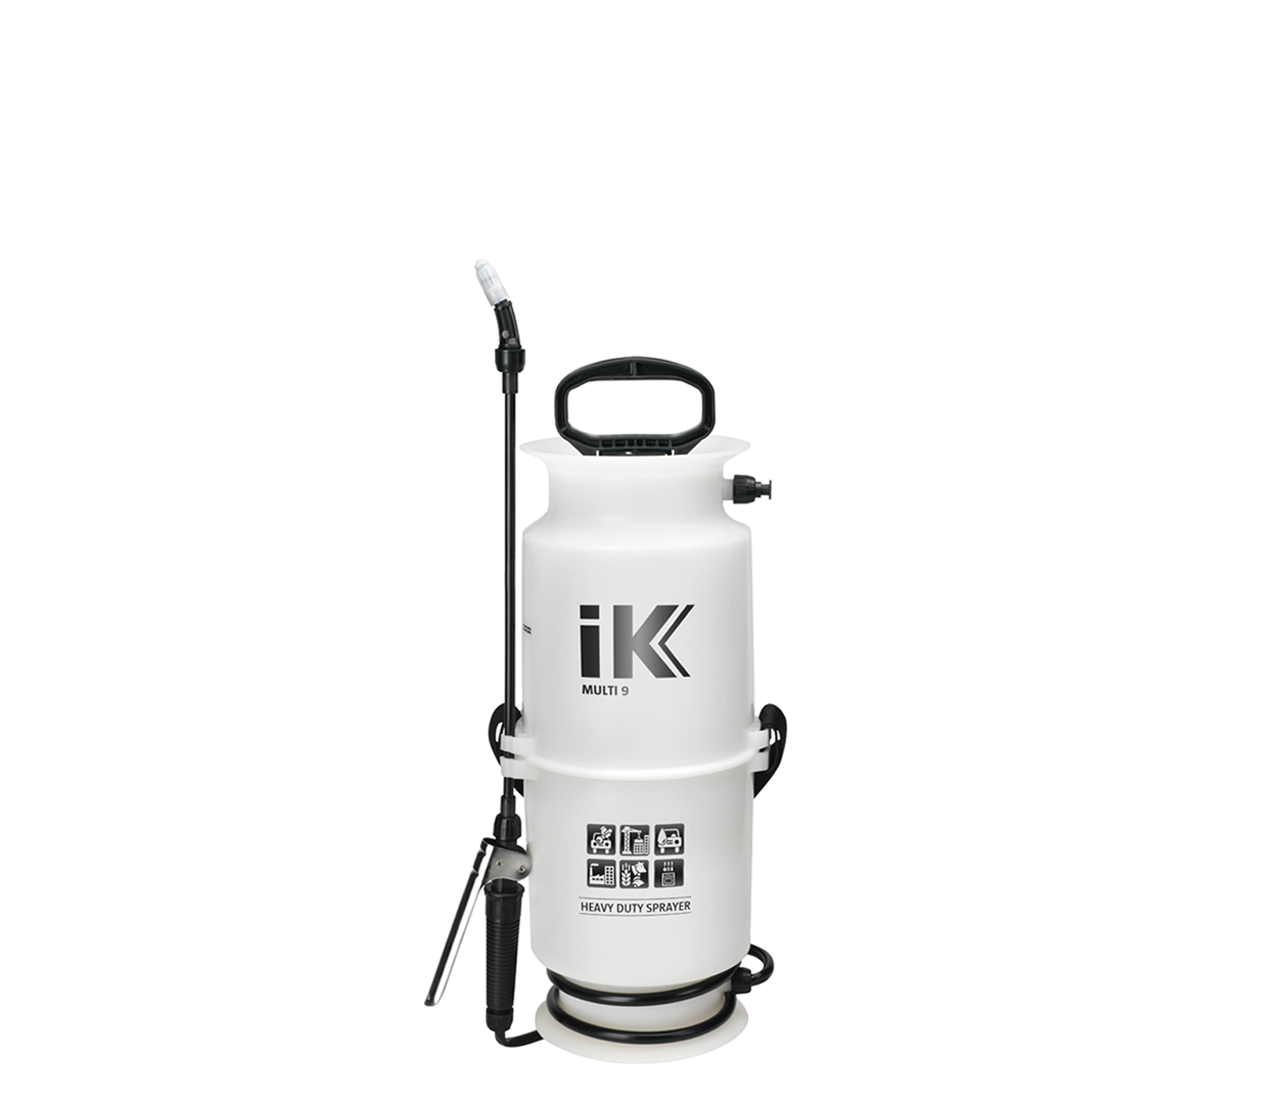 Goizper IK-6 MULTI Industrial Pressure Sprayer with 0.5 metre Extension Lance 